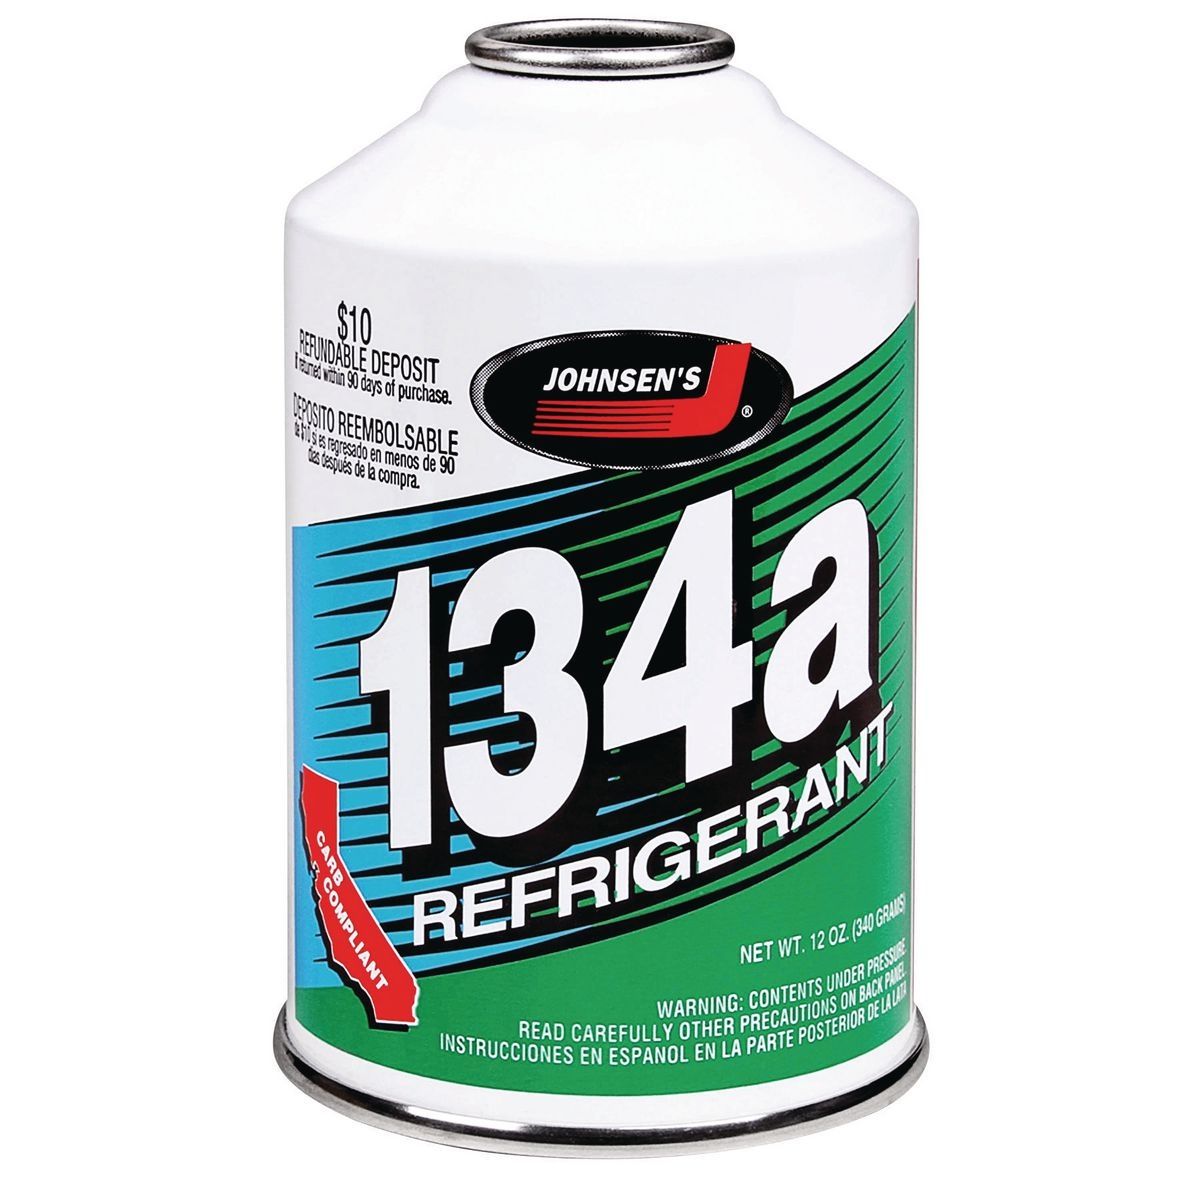 JOHNSEN'S 12 oz. R134a Refrigerant - CARB Certified